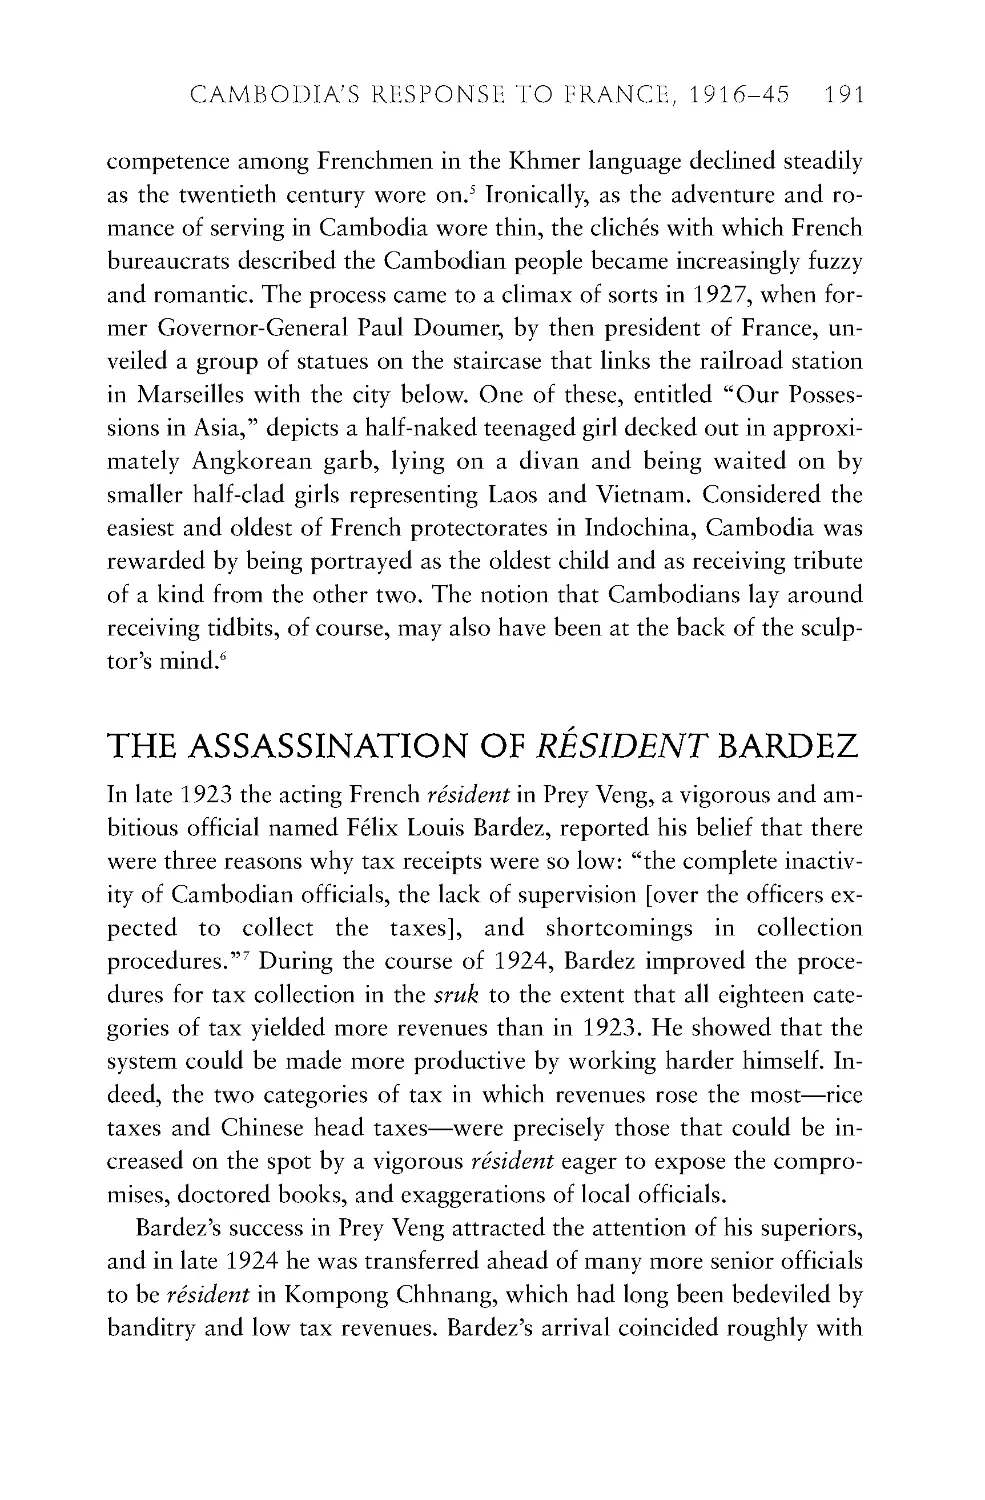 The Assassination of Resident Bardez